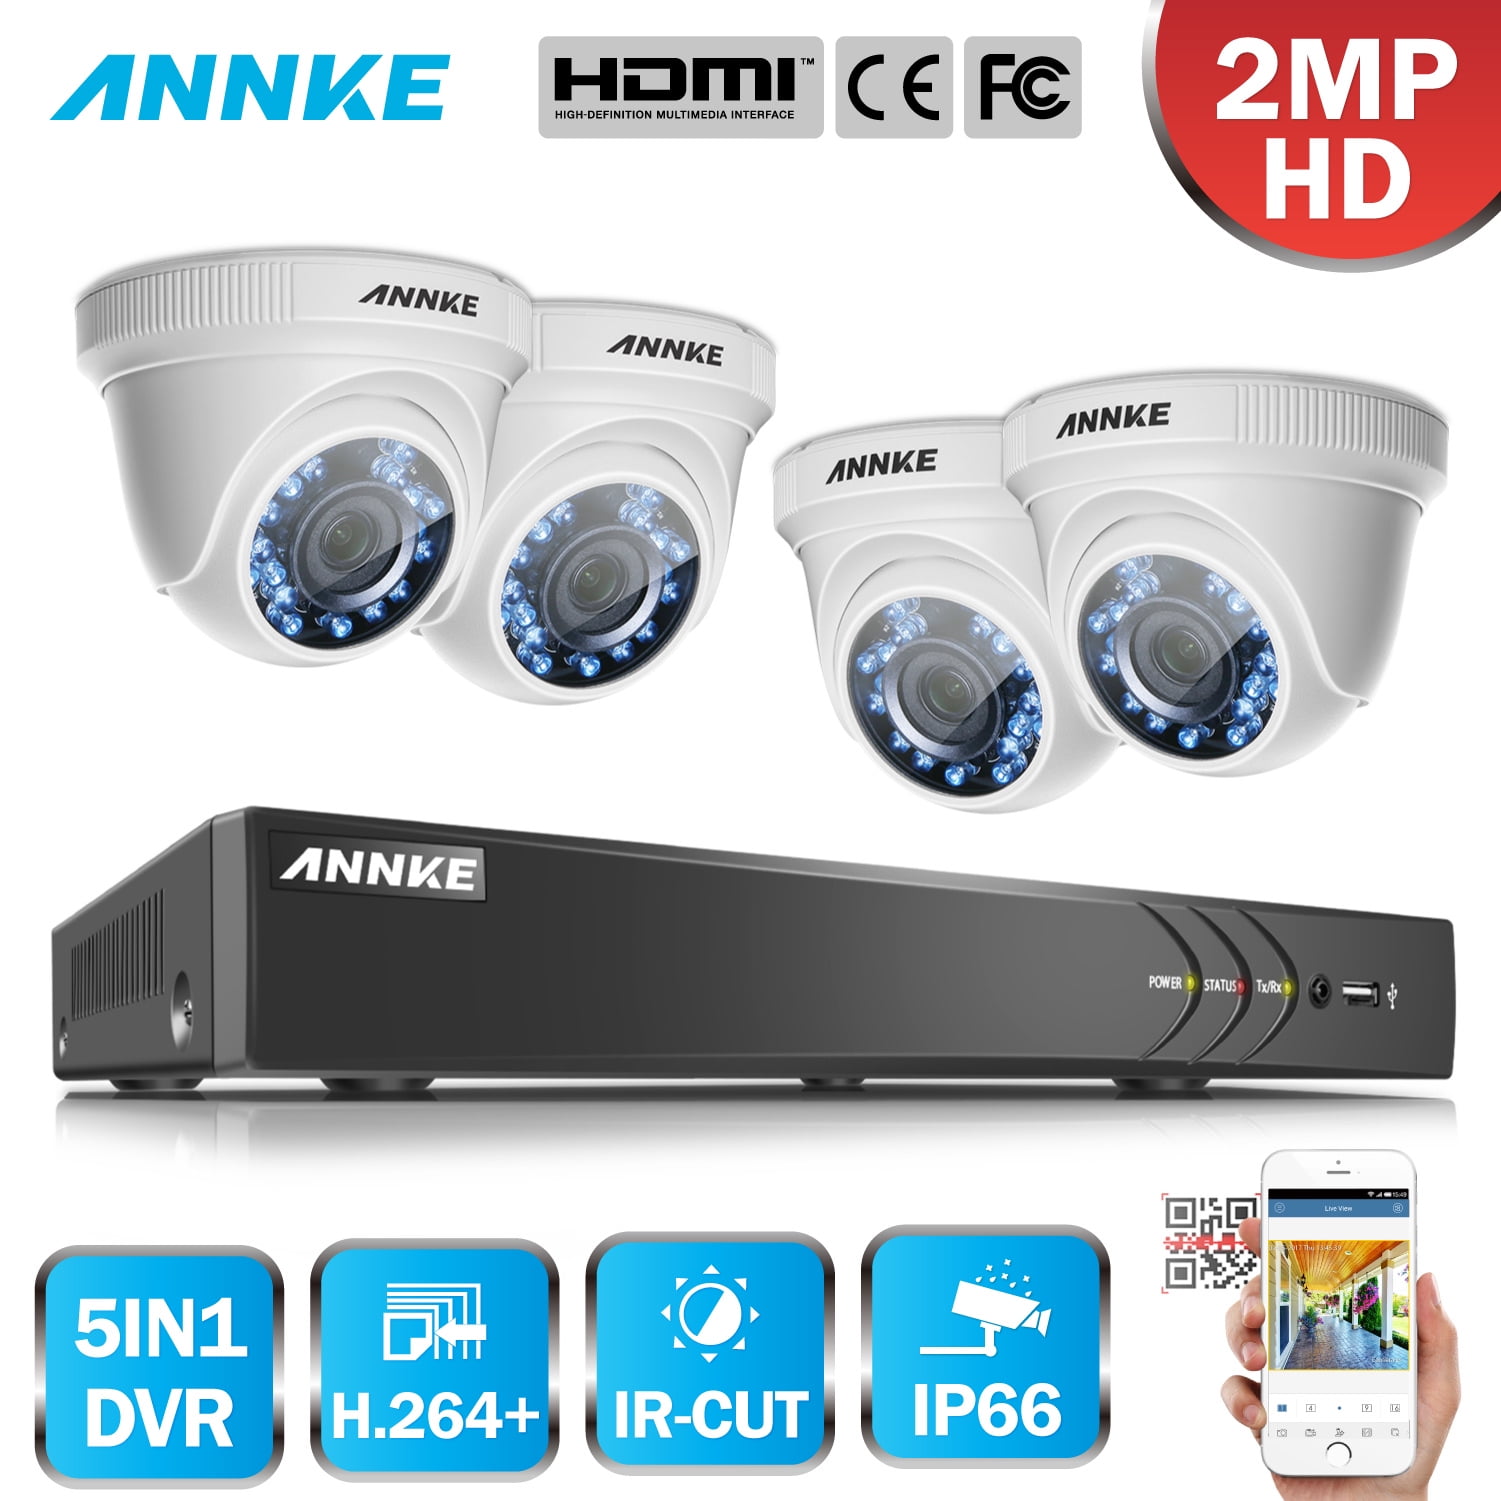 ANNKE ANNKE Home Security System 8ch 1080P HD TVI DVR w/ 2TB Hard Drive and 8x TVI 108 